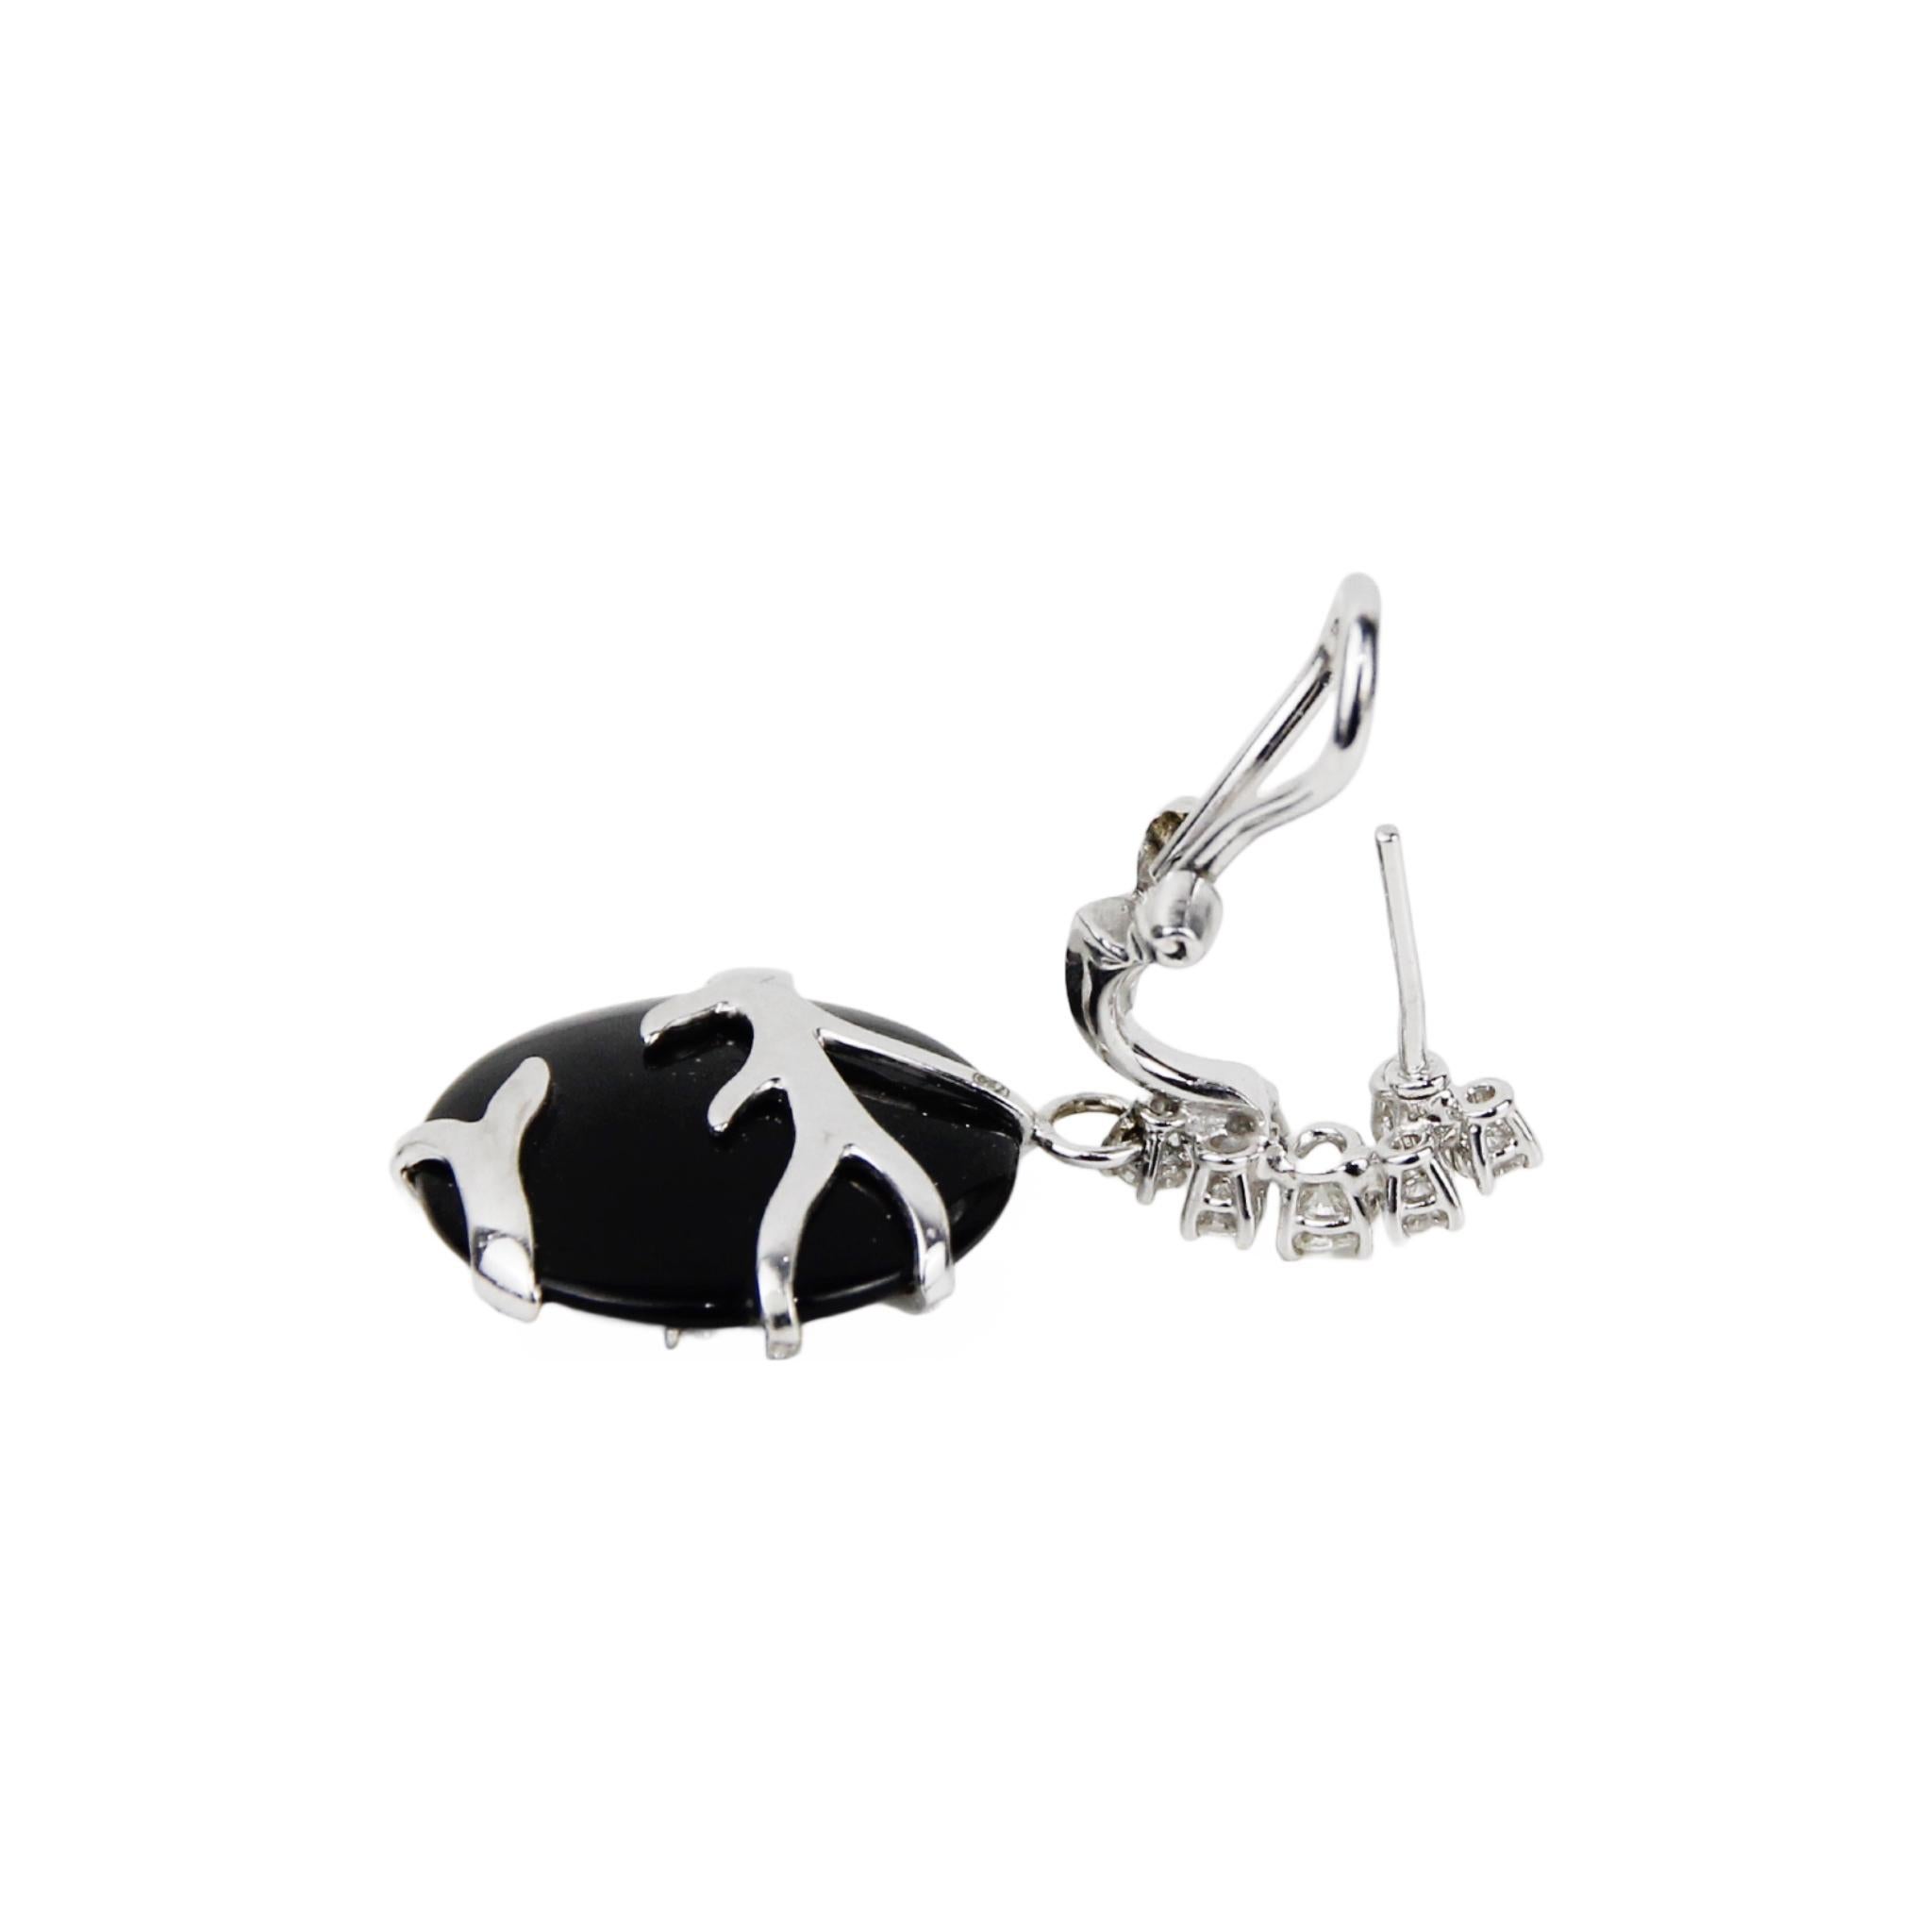 Brilliant Cut Ecj Collection 18k White Gold Black Onyx Earrings